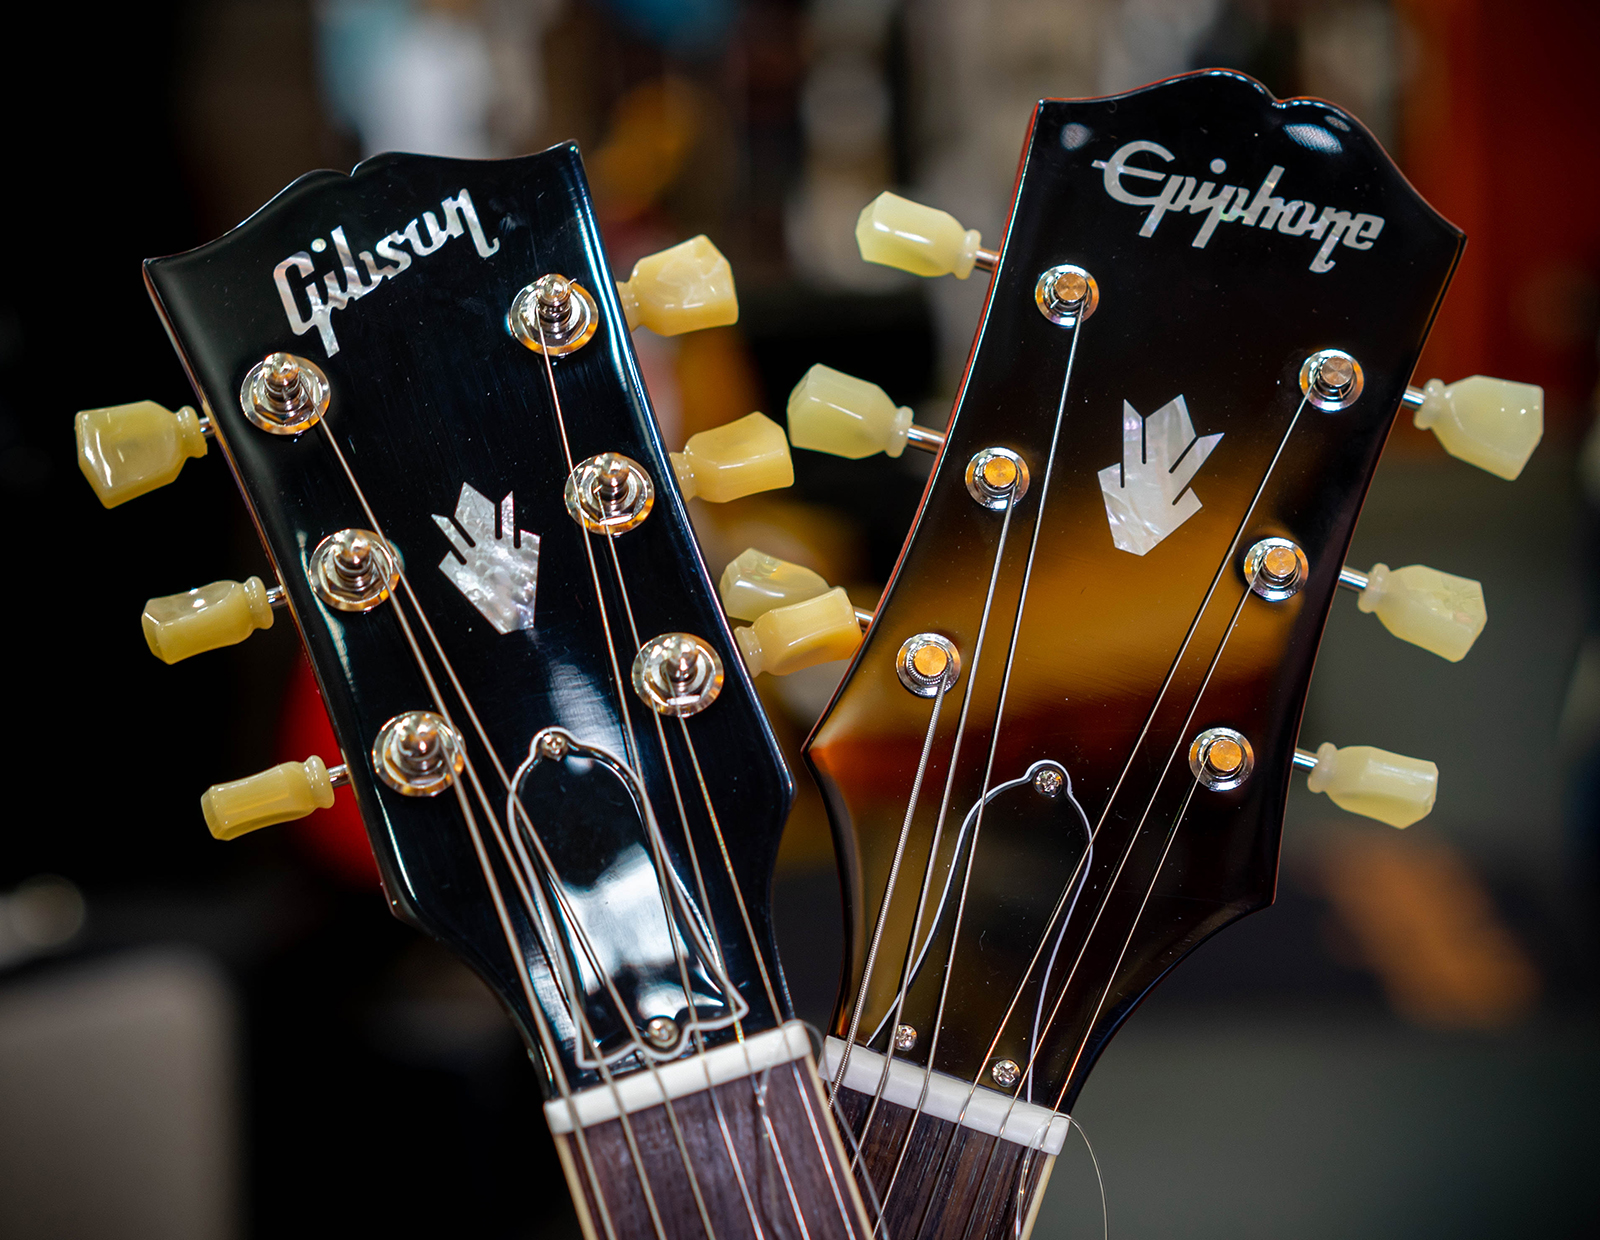 Epiphone Gibson guitar SG HISCOX